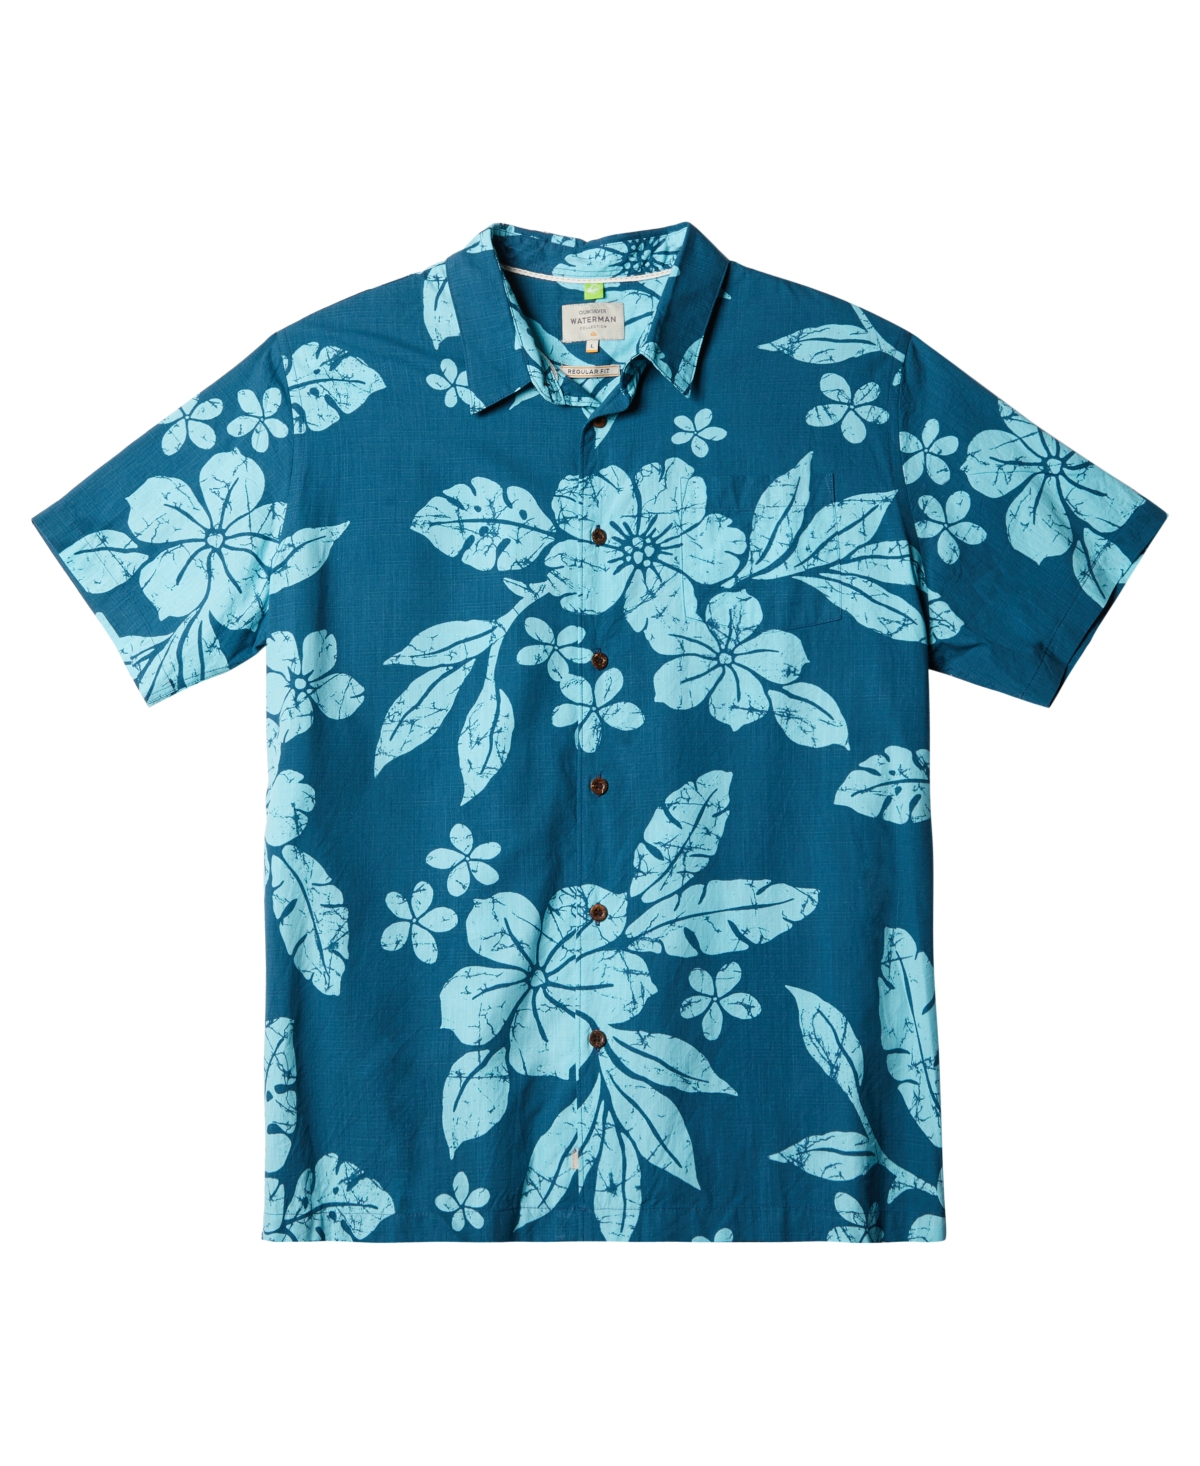 Quiksilver Waterman Men's Aqua Flower Short Sleeves Shirt In Seaport Aqua Flowers